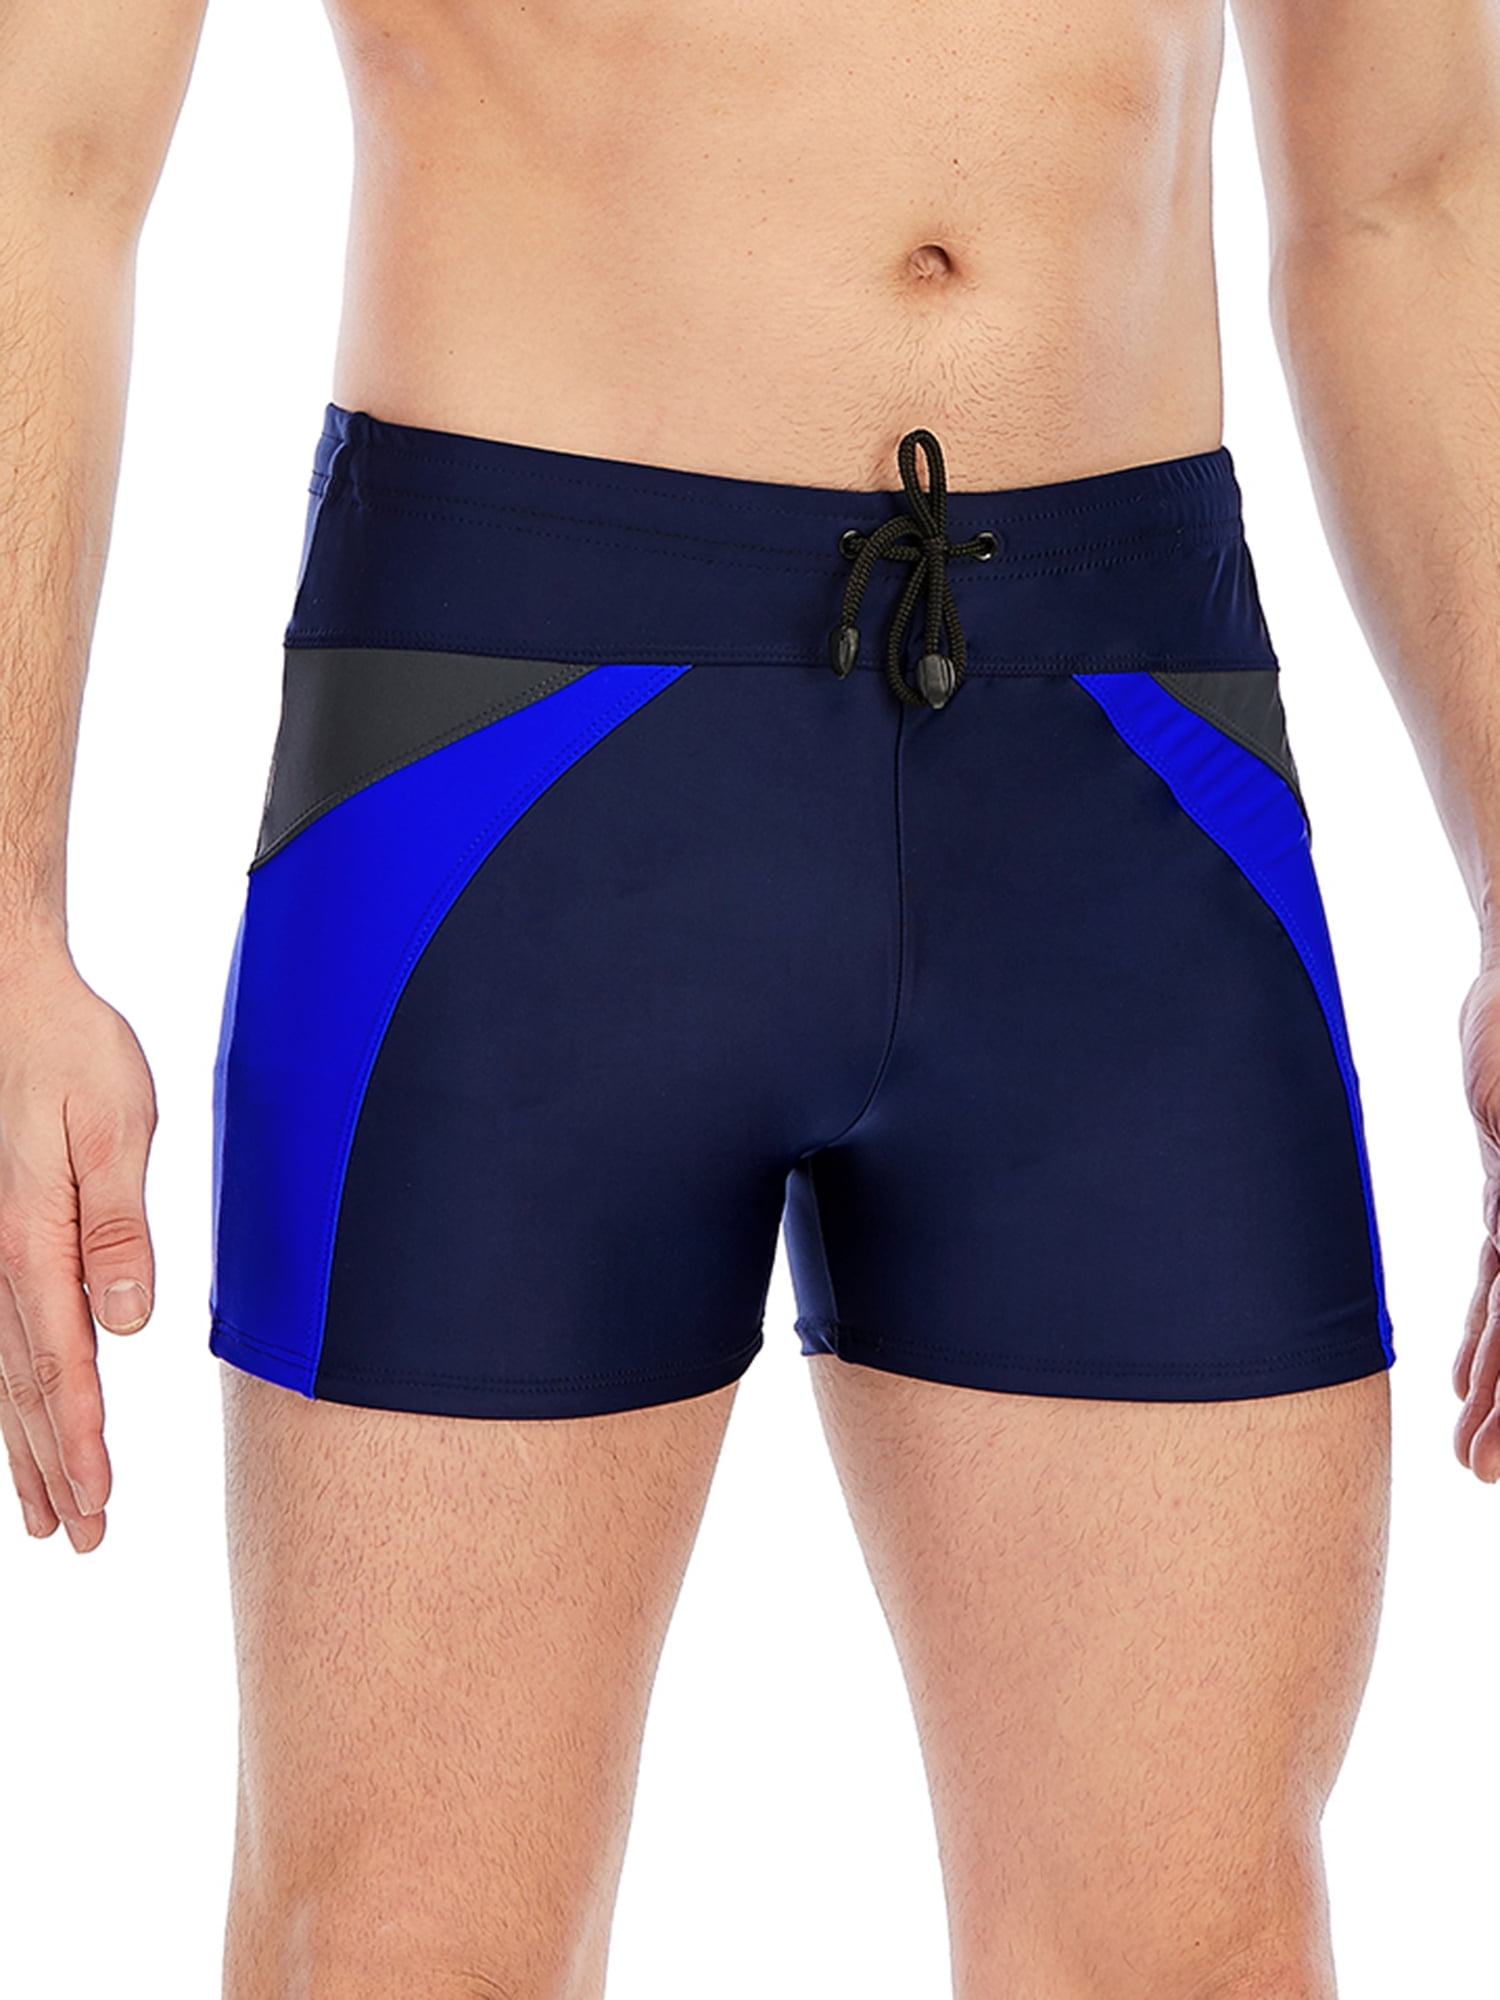 Jonathan Swim Mens Splice Swimming Boxer Short Square Leg Swimsuit with Drawstring